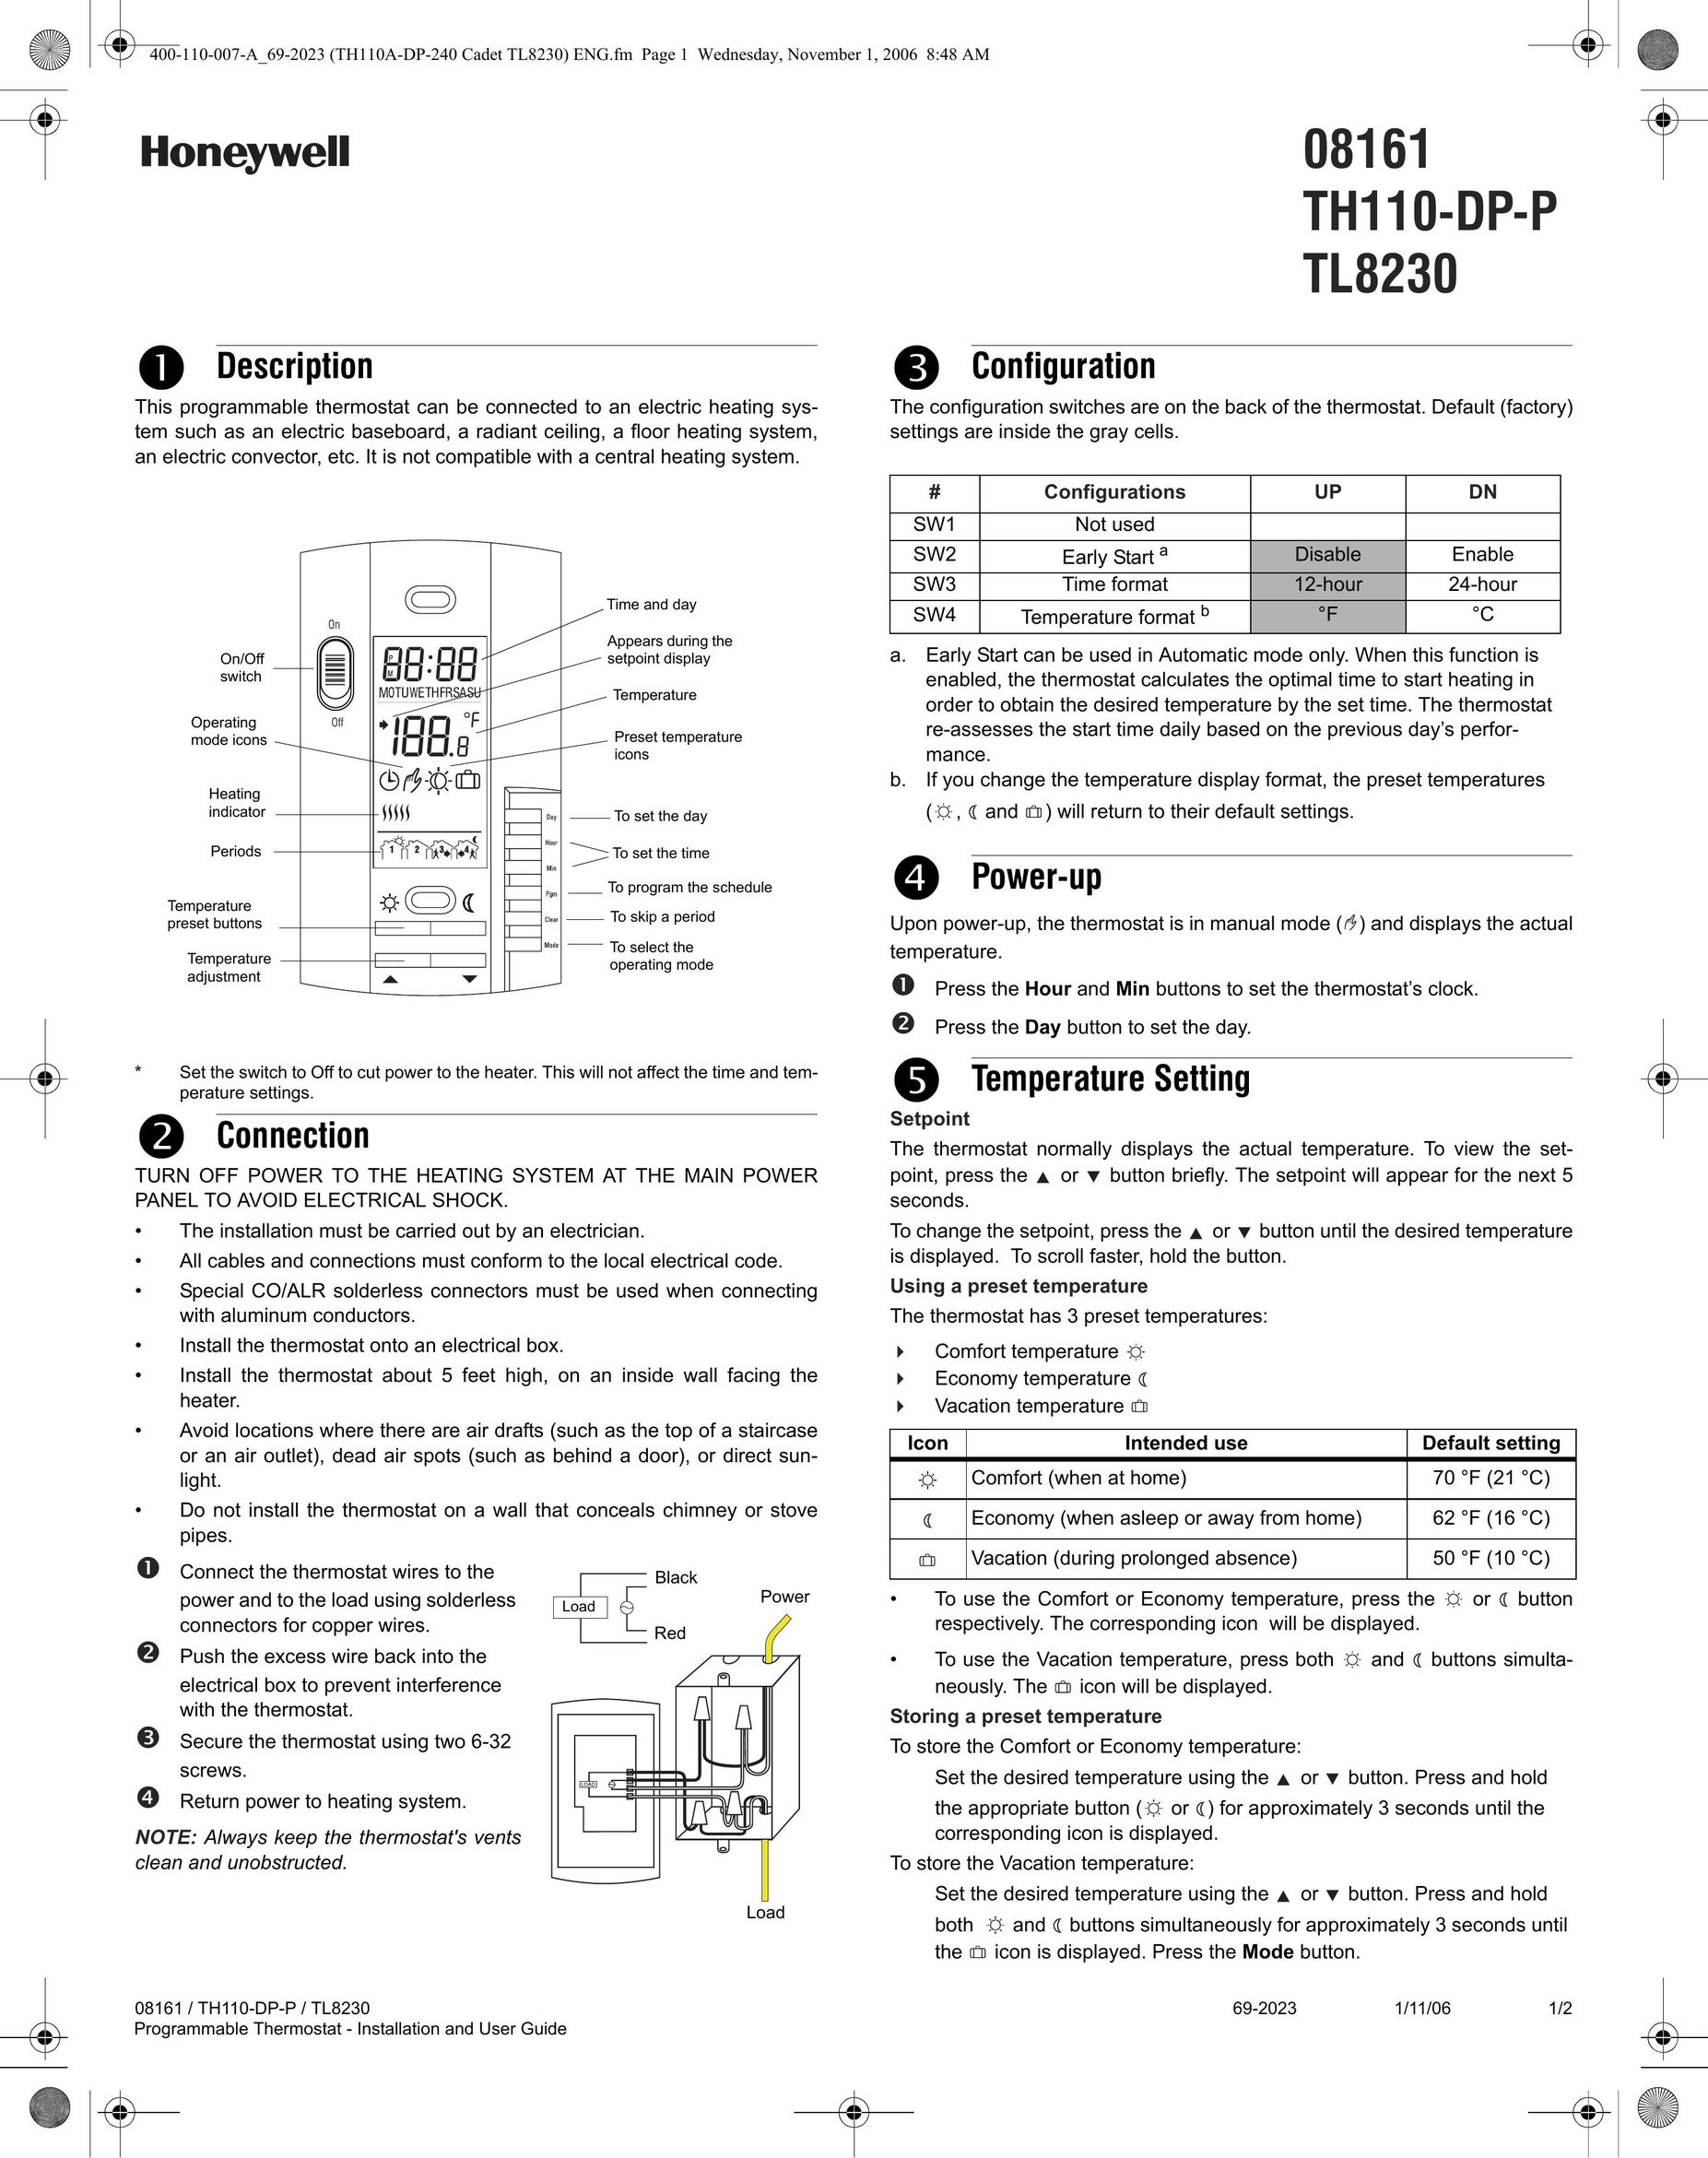 Honeywell TH110-DP-P Personal Computer User Manual